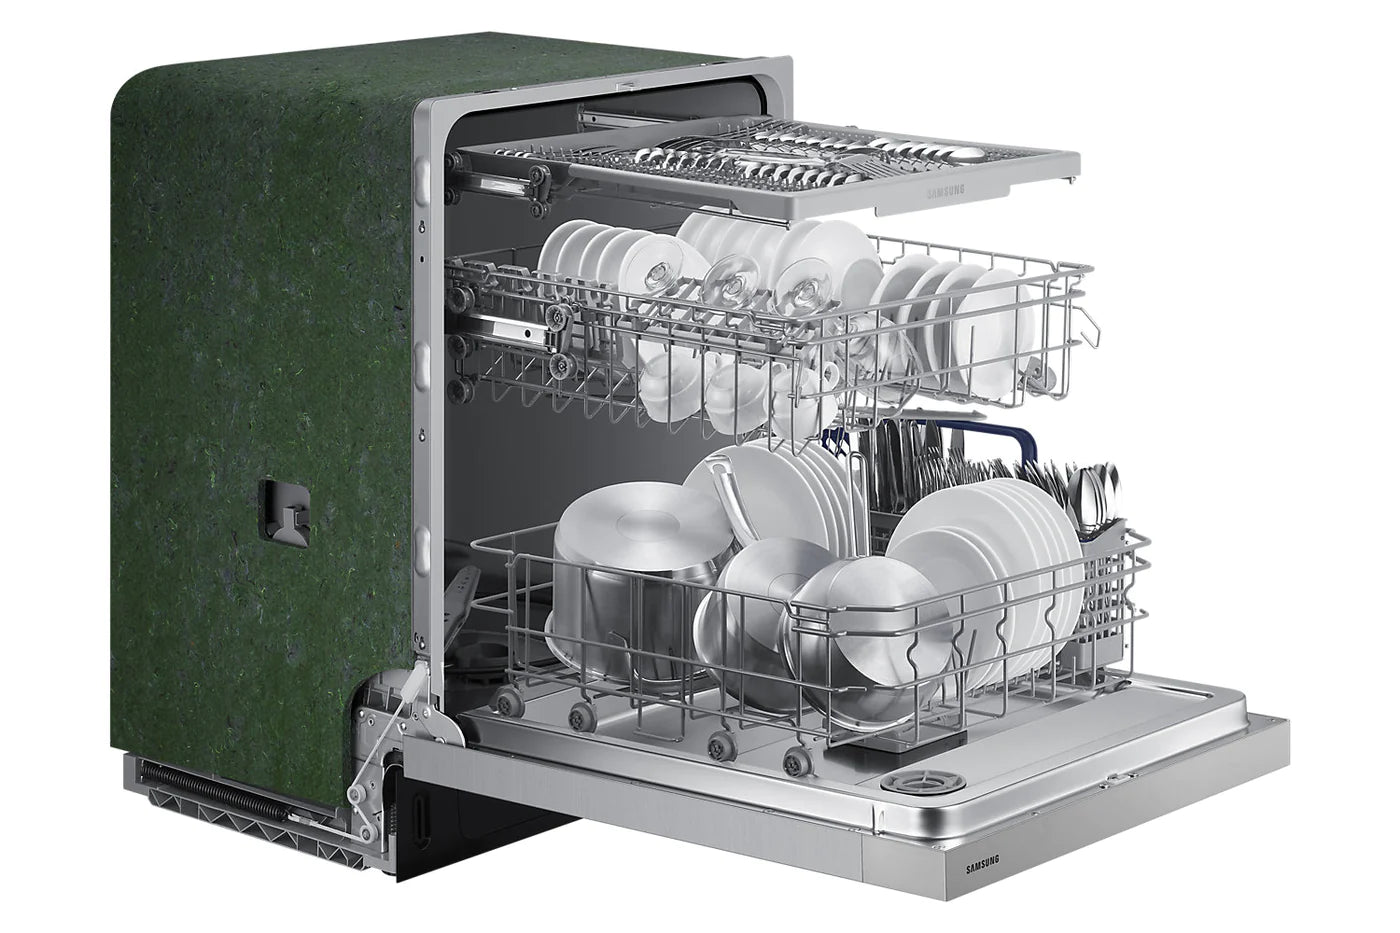 Samsung Dishwashers 24" Stainless steel DW80N3030US